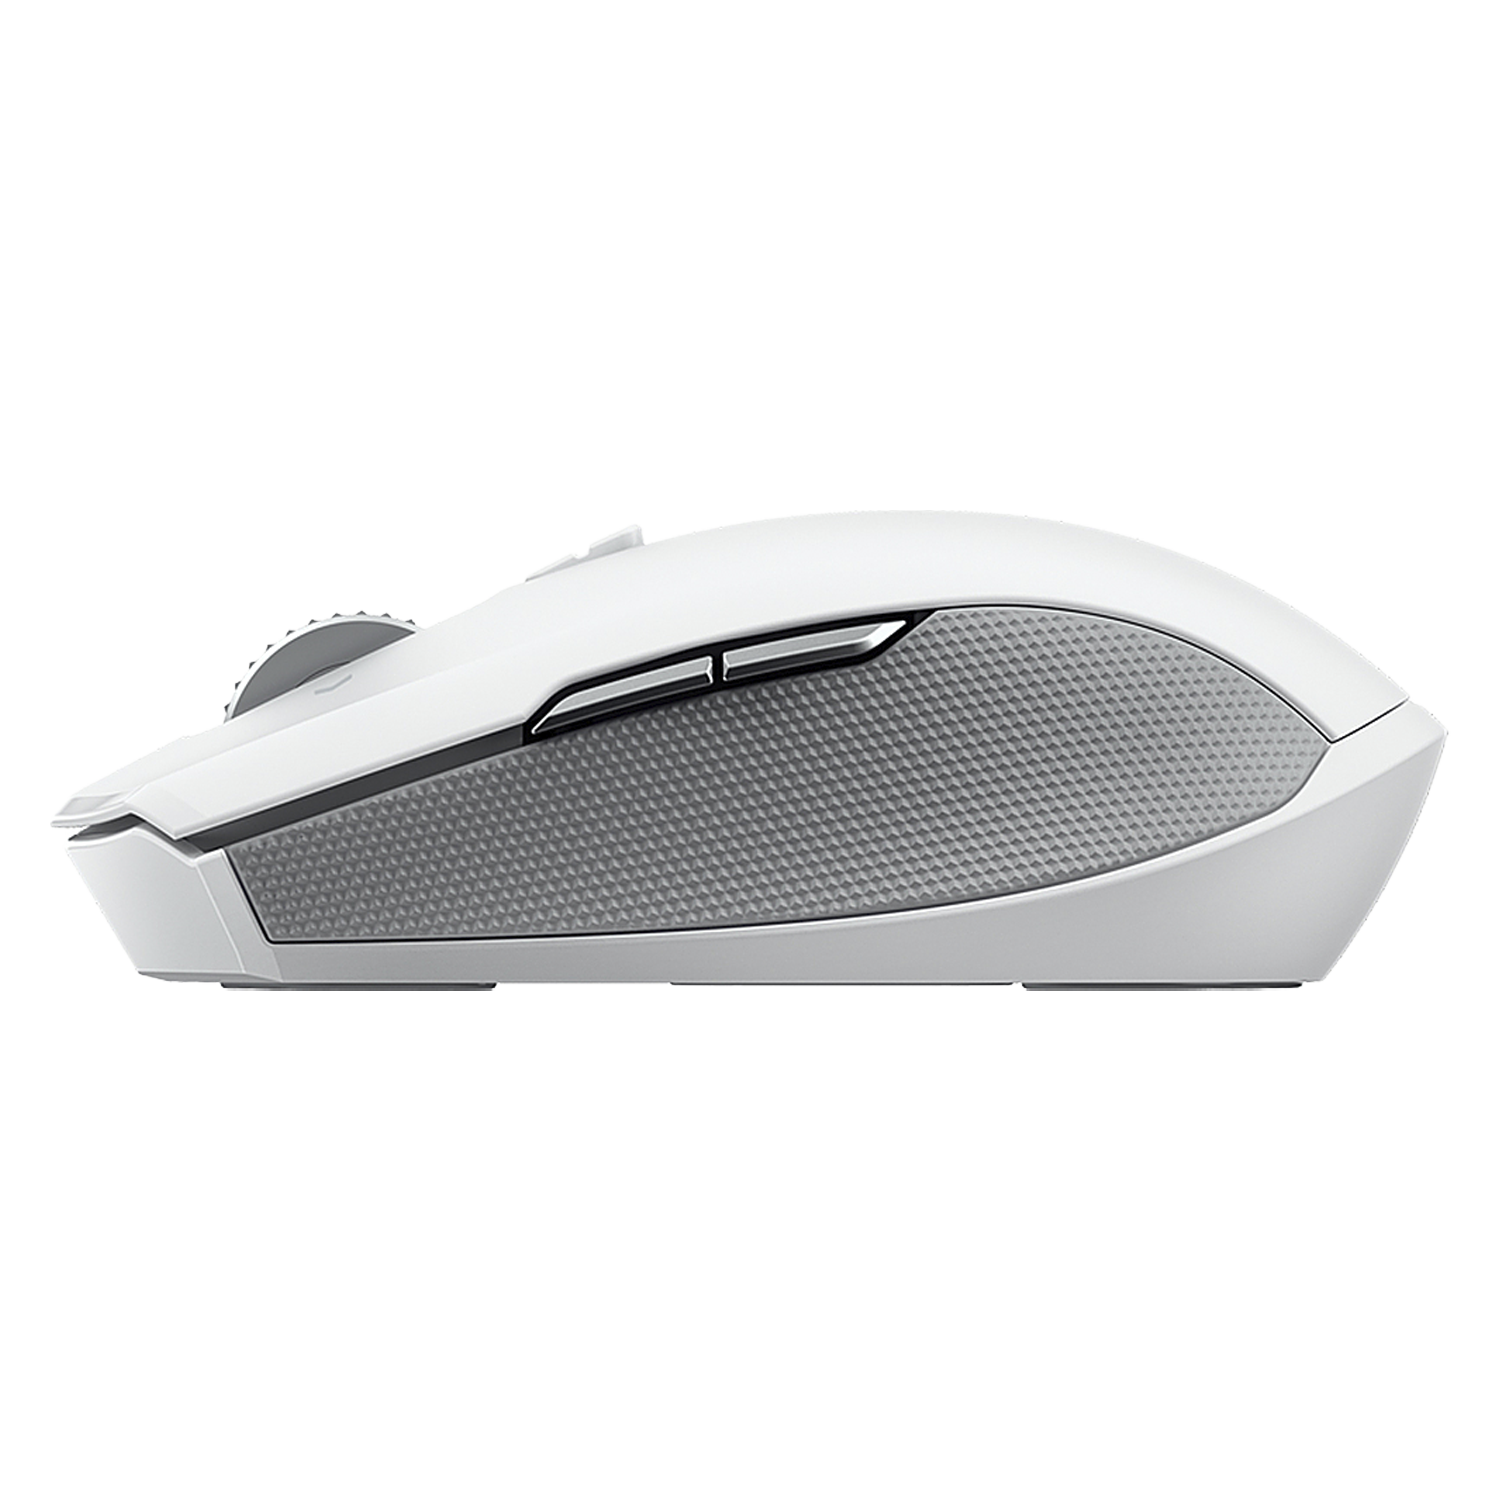 Mouse Razer Pro Click Wireless - (03990100)